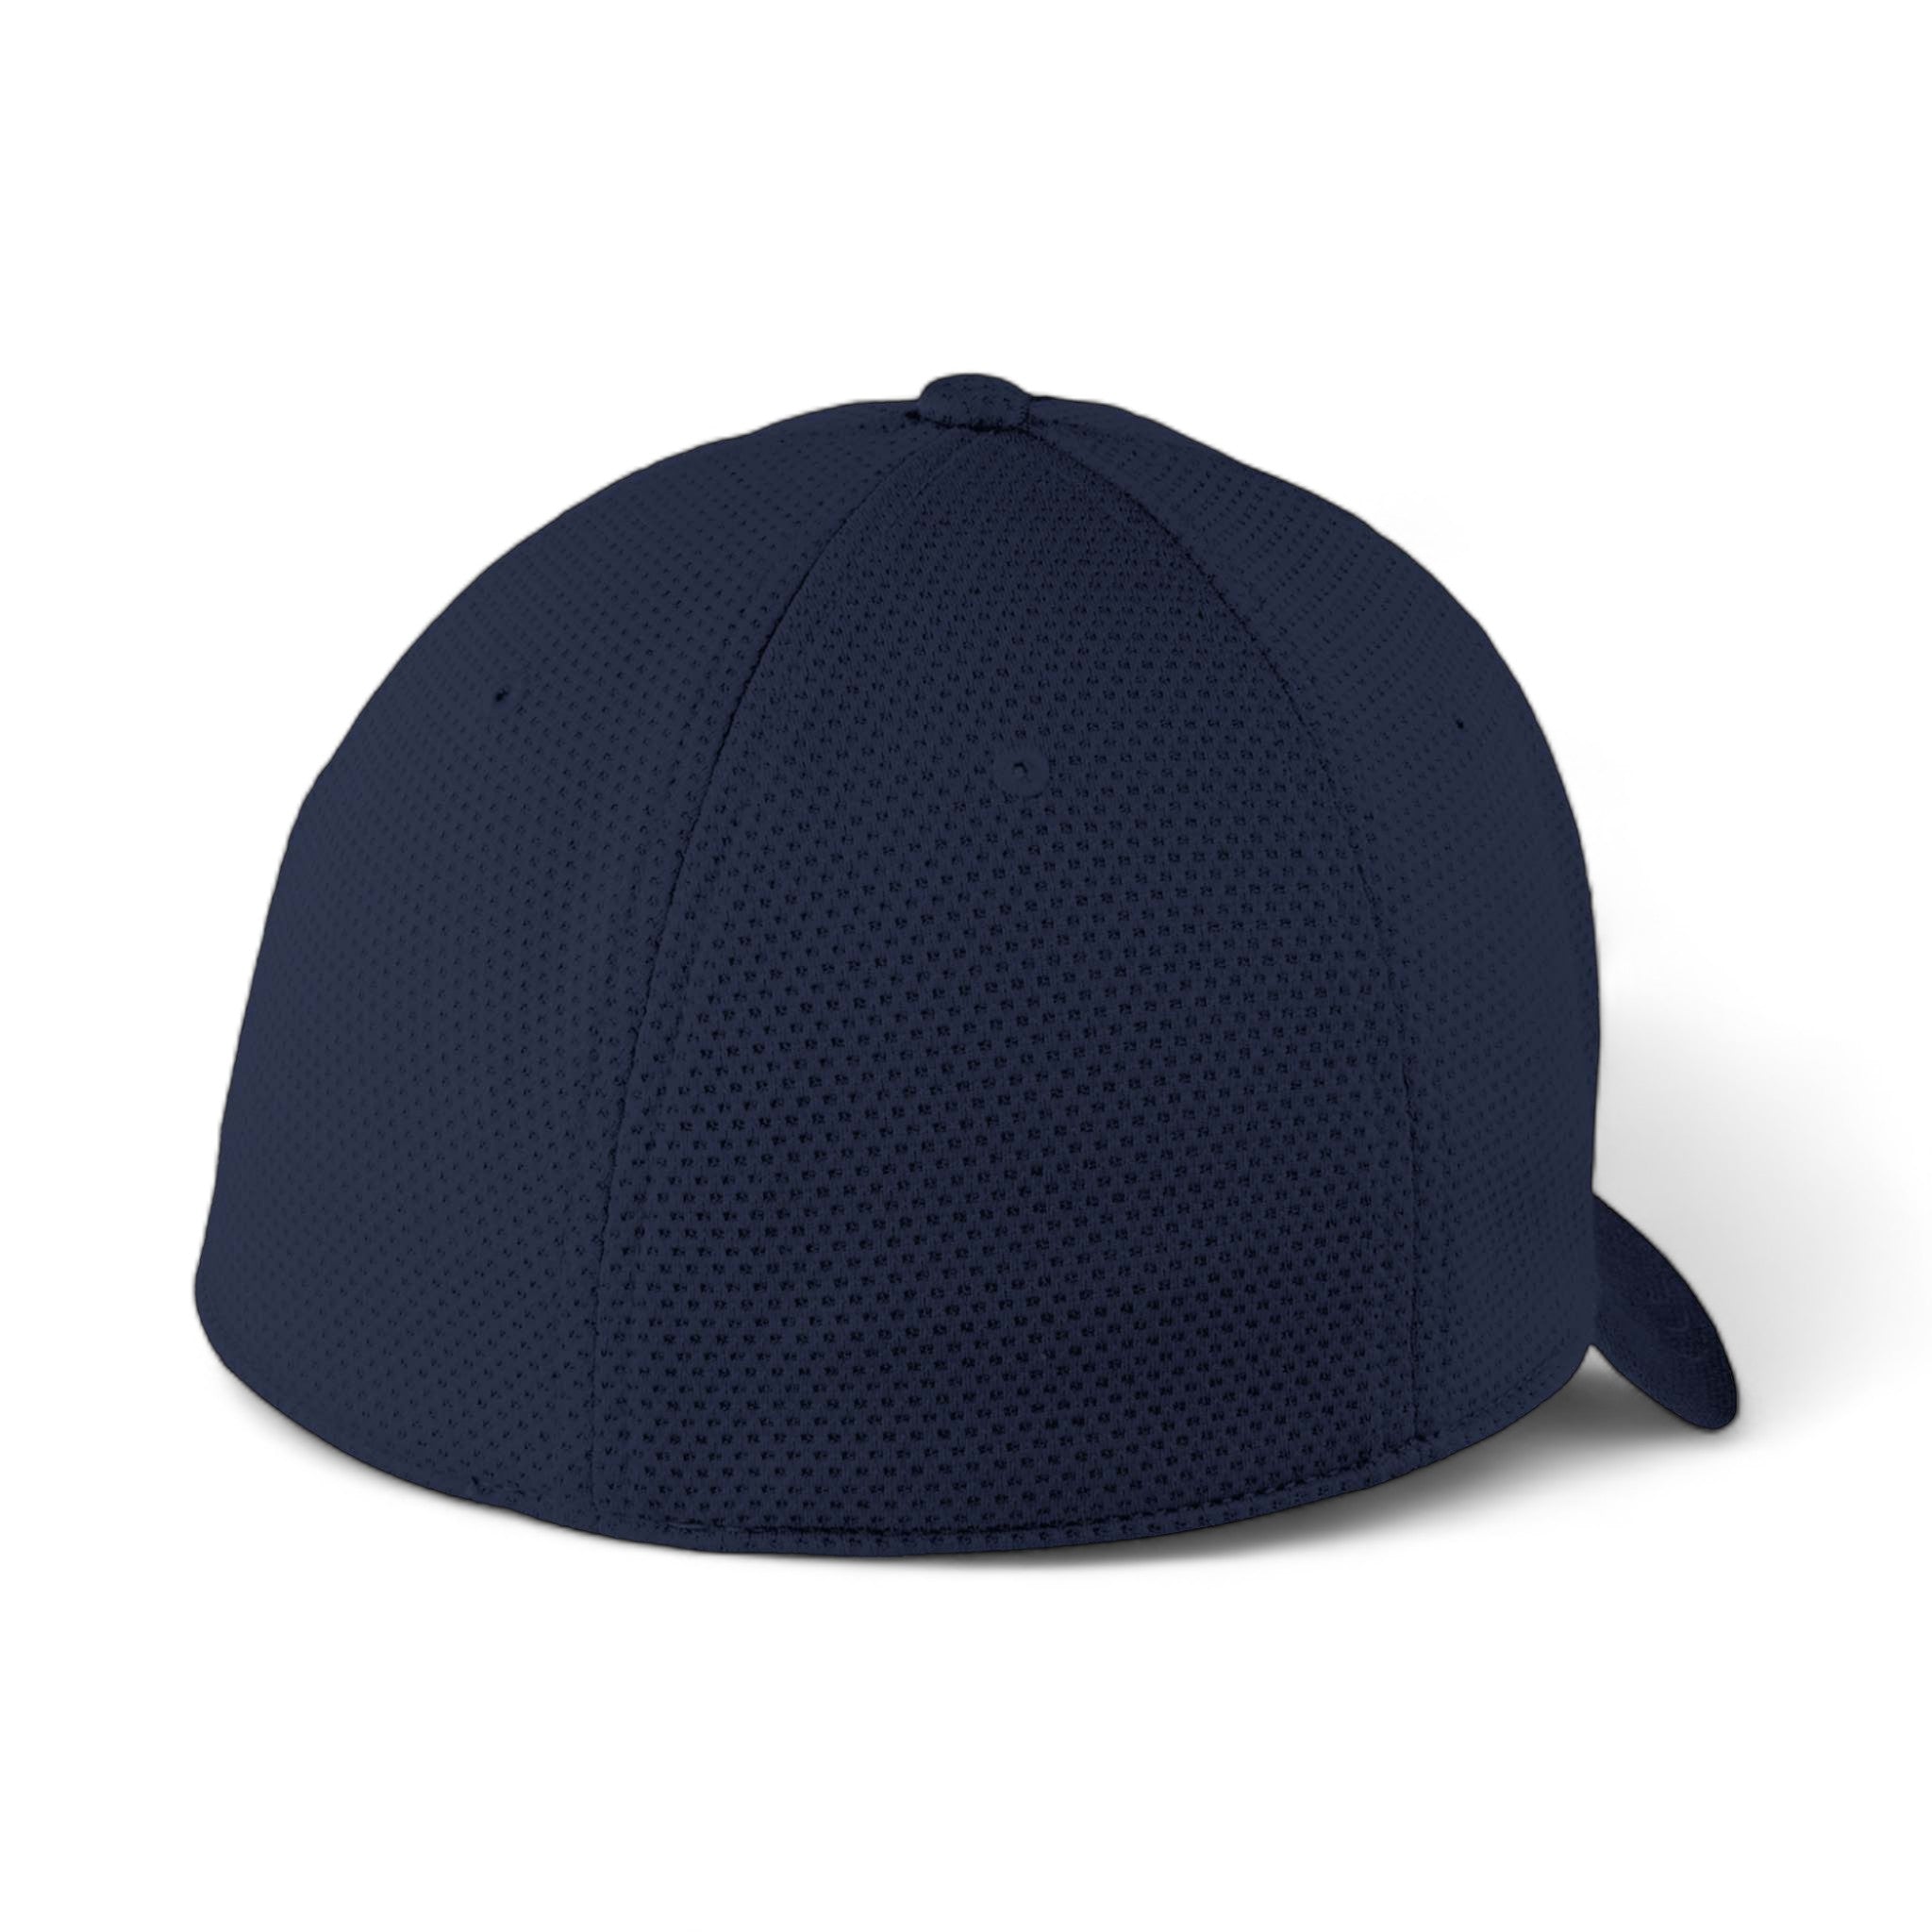 Back view of New Era NE1090 custom hat in league navy